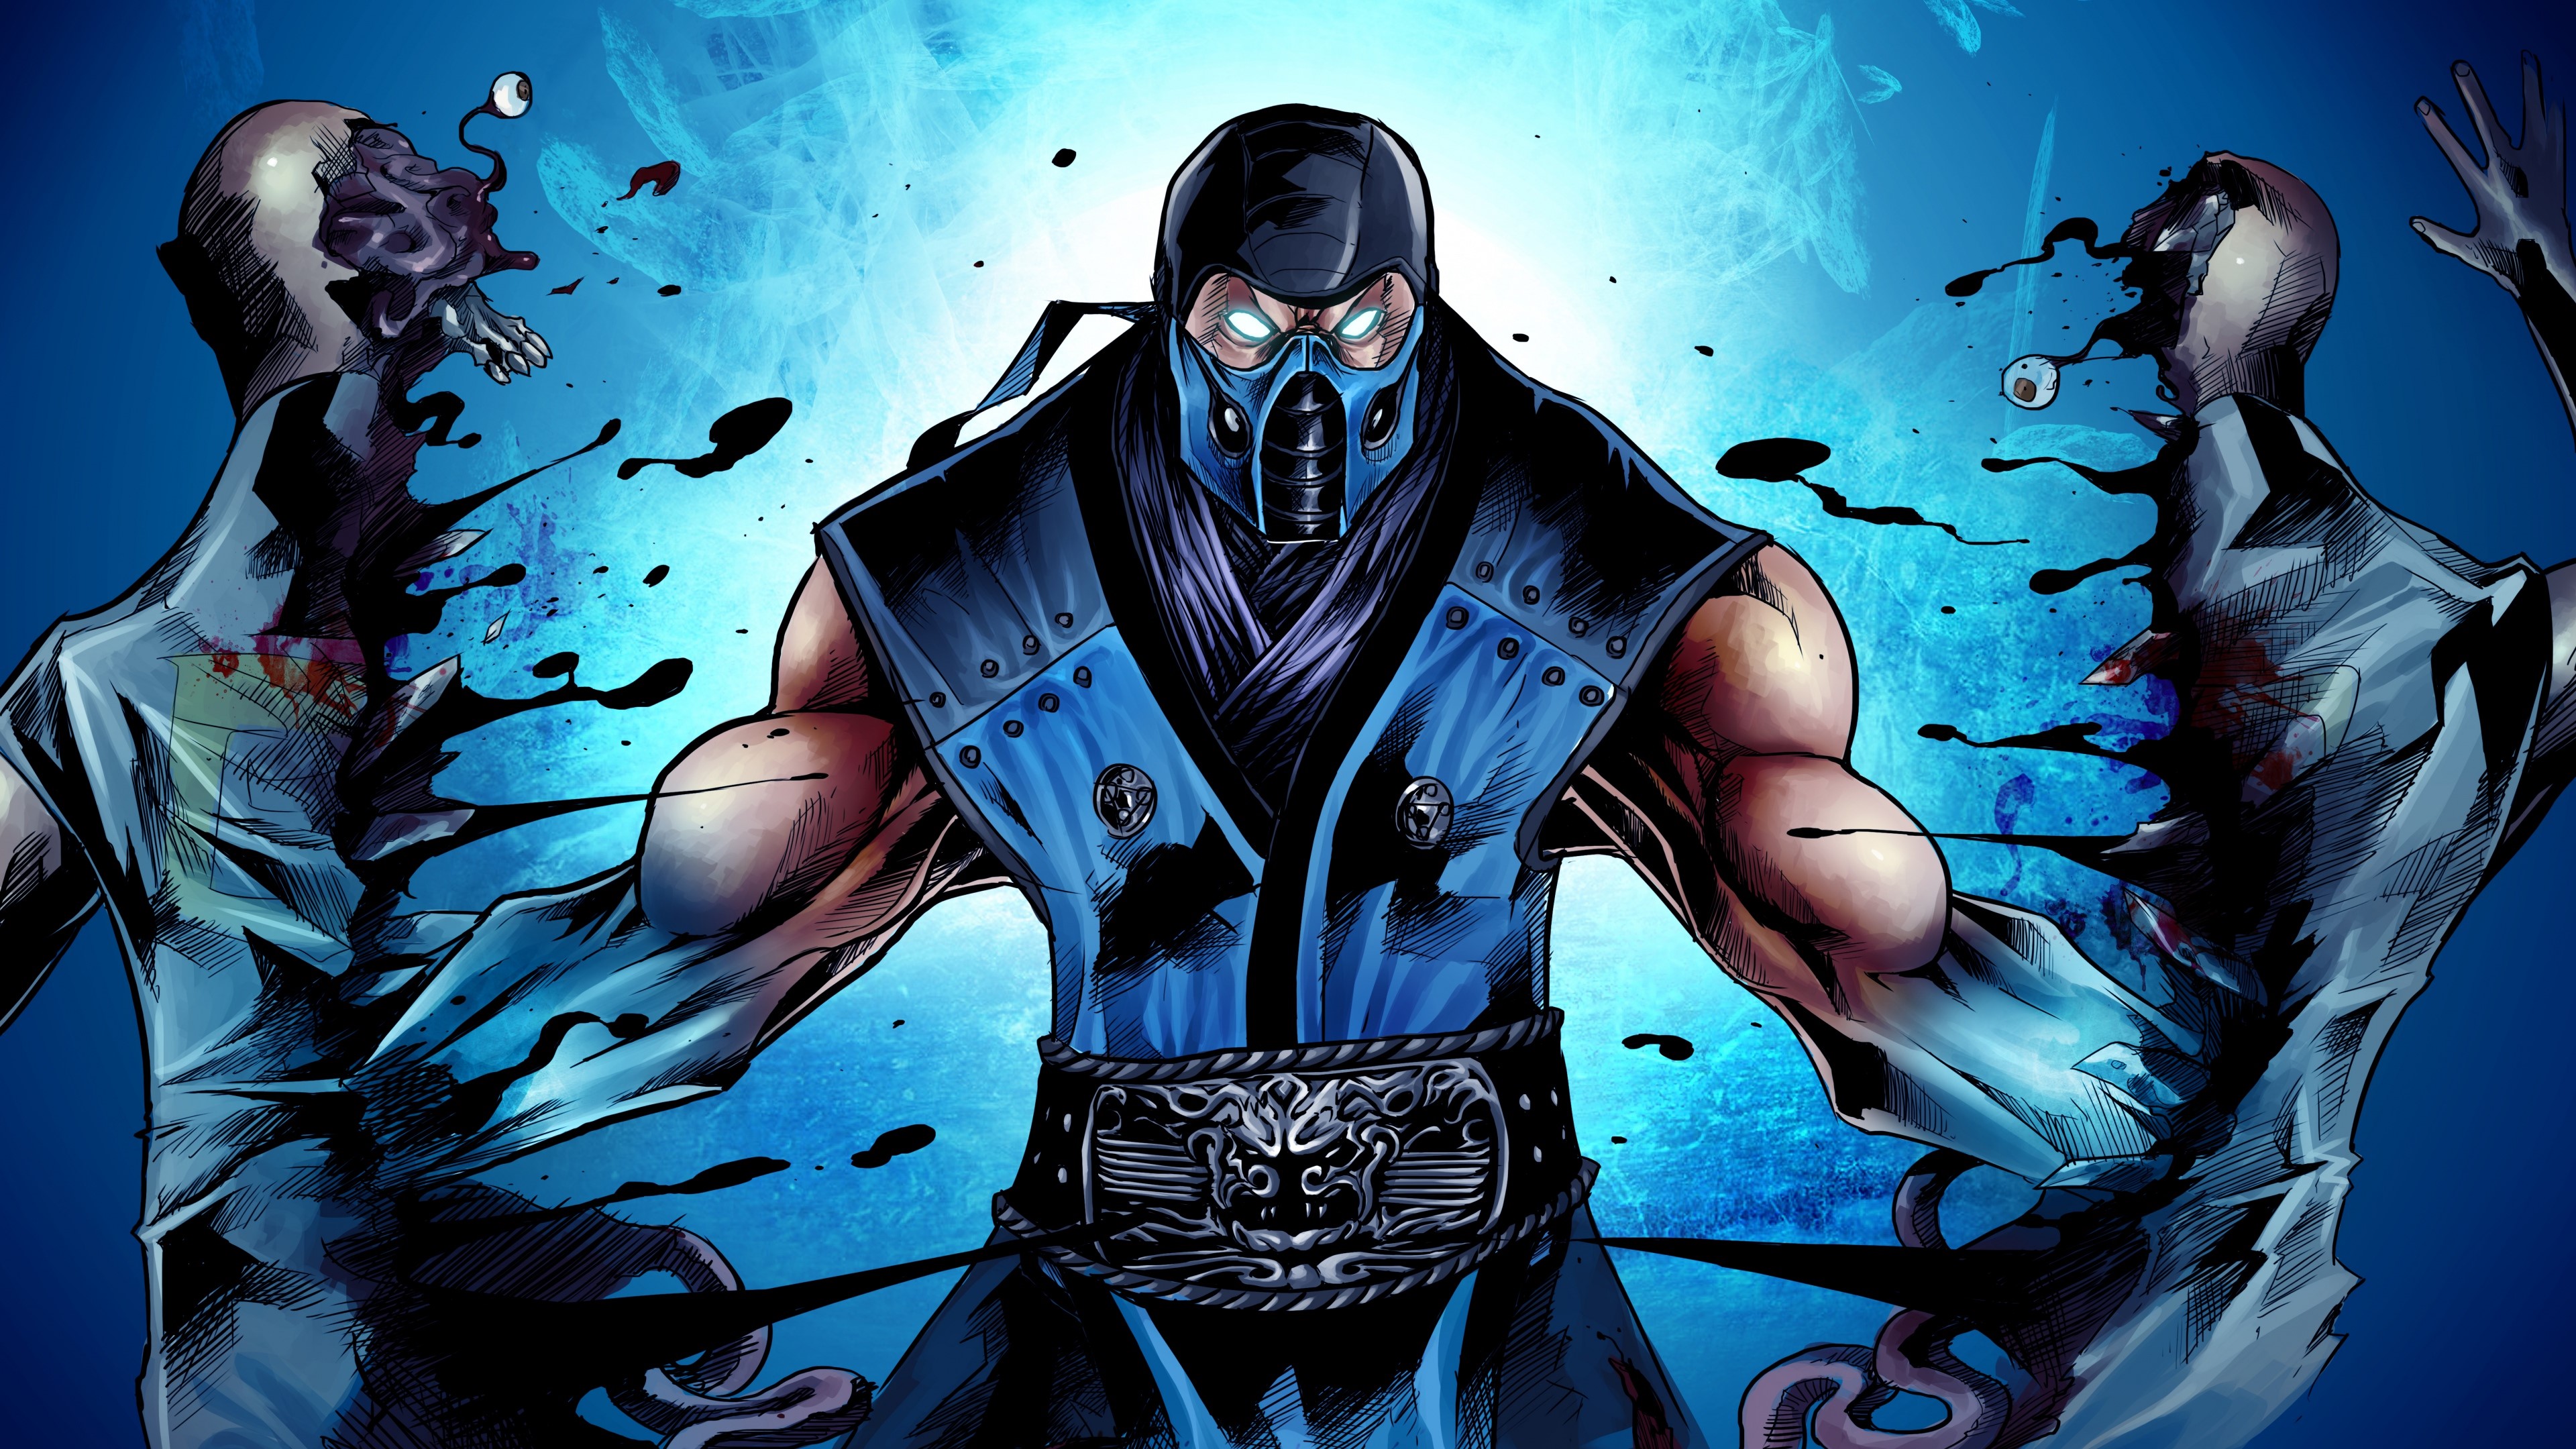 Cool Mortal Kombat Backgrounds